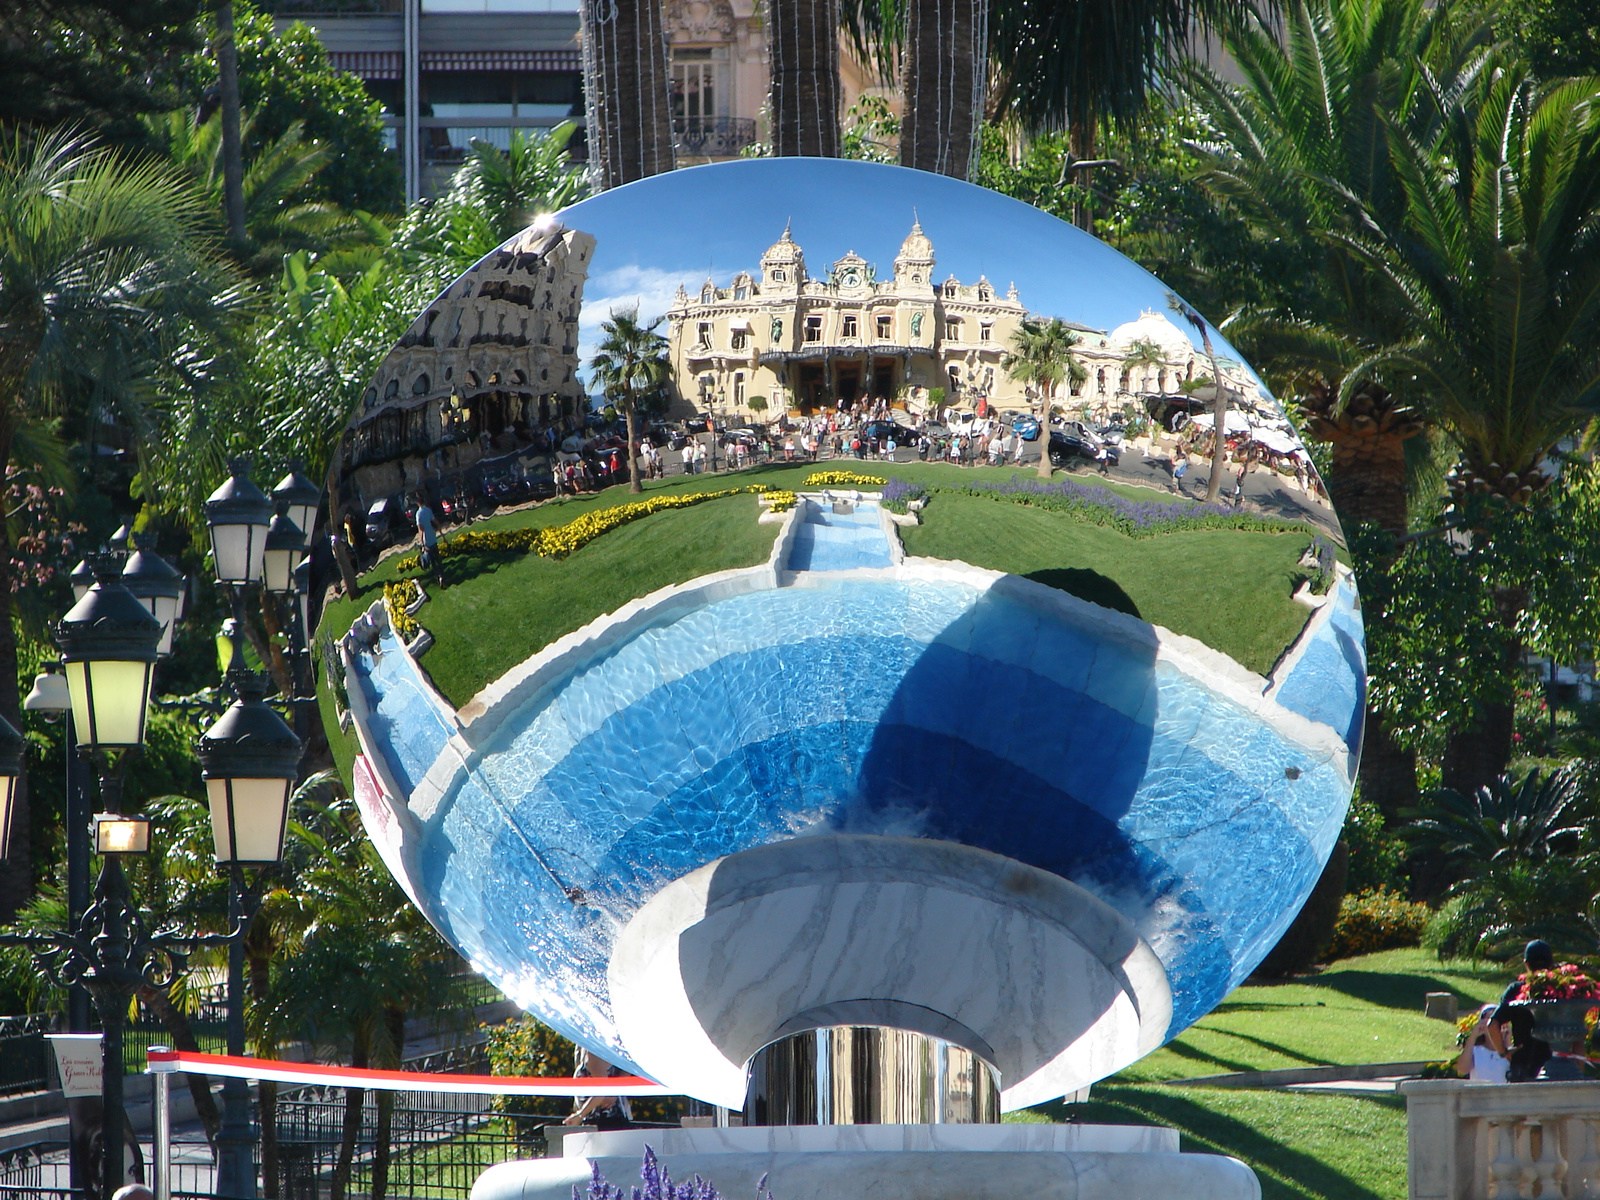 Monte Carlo-i Casino tükörből nézve